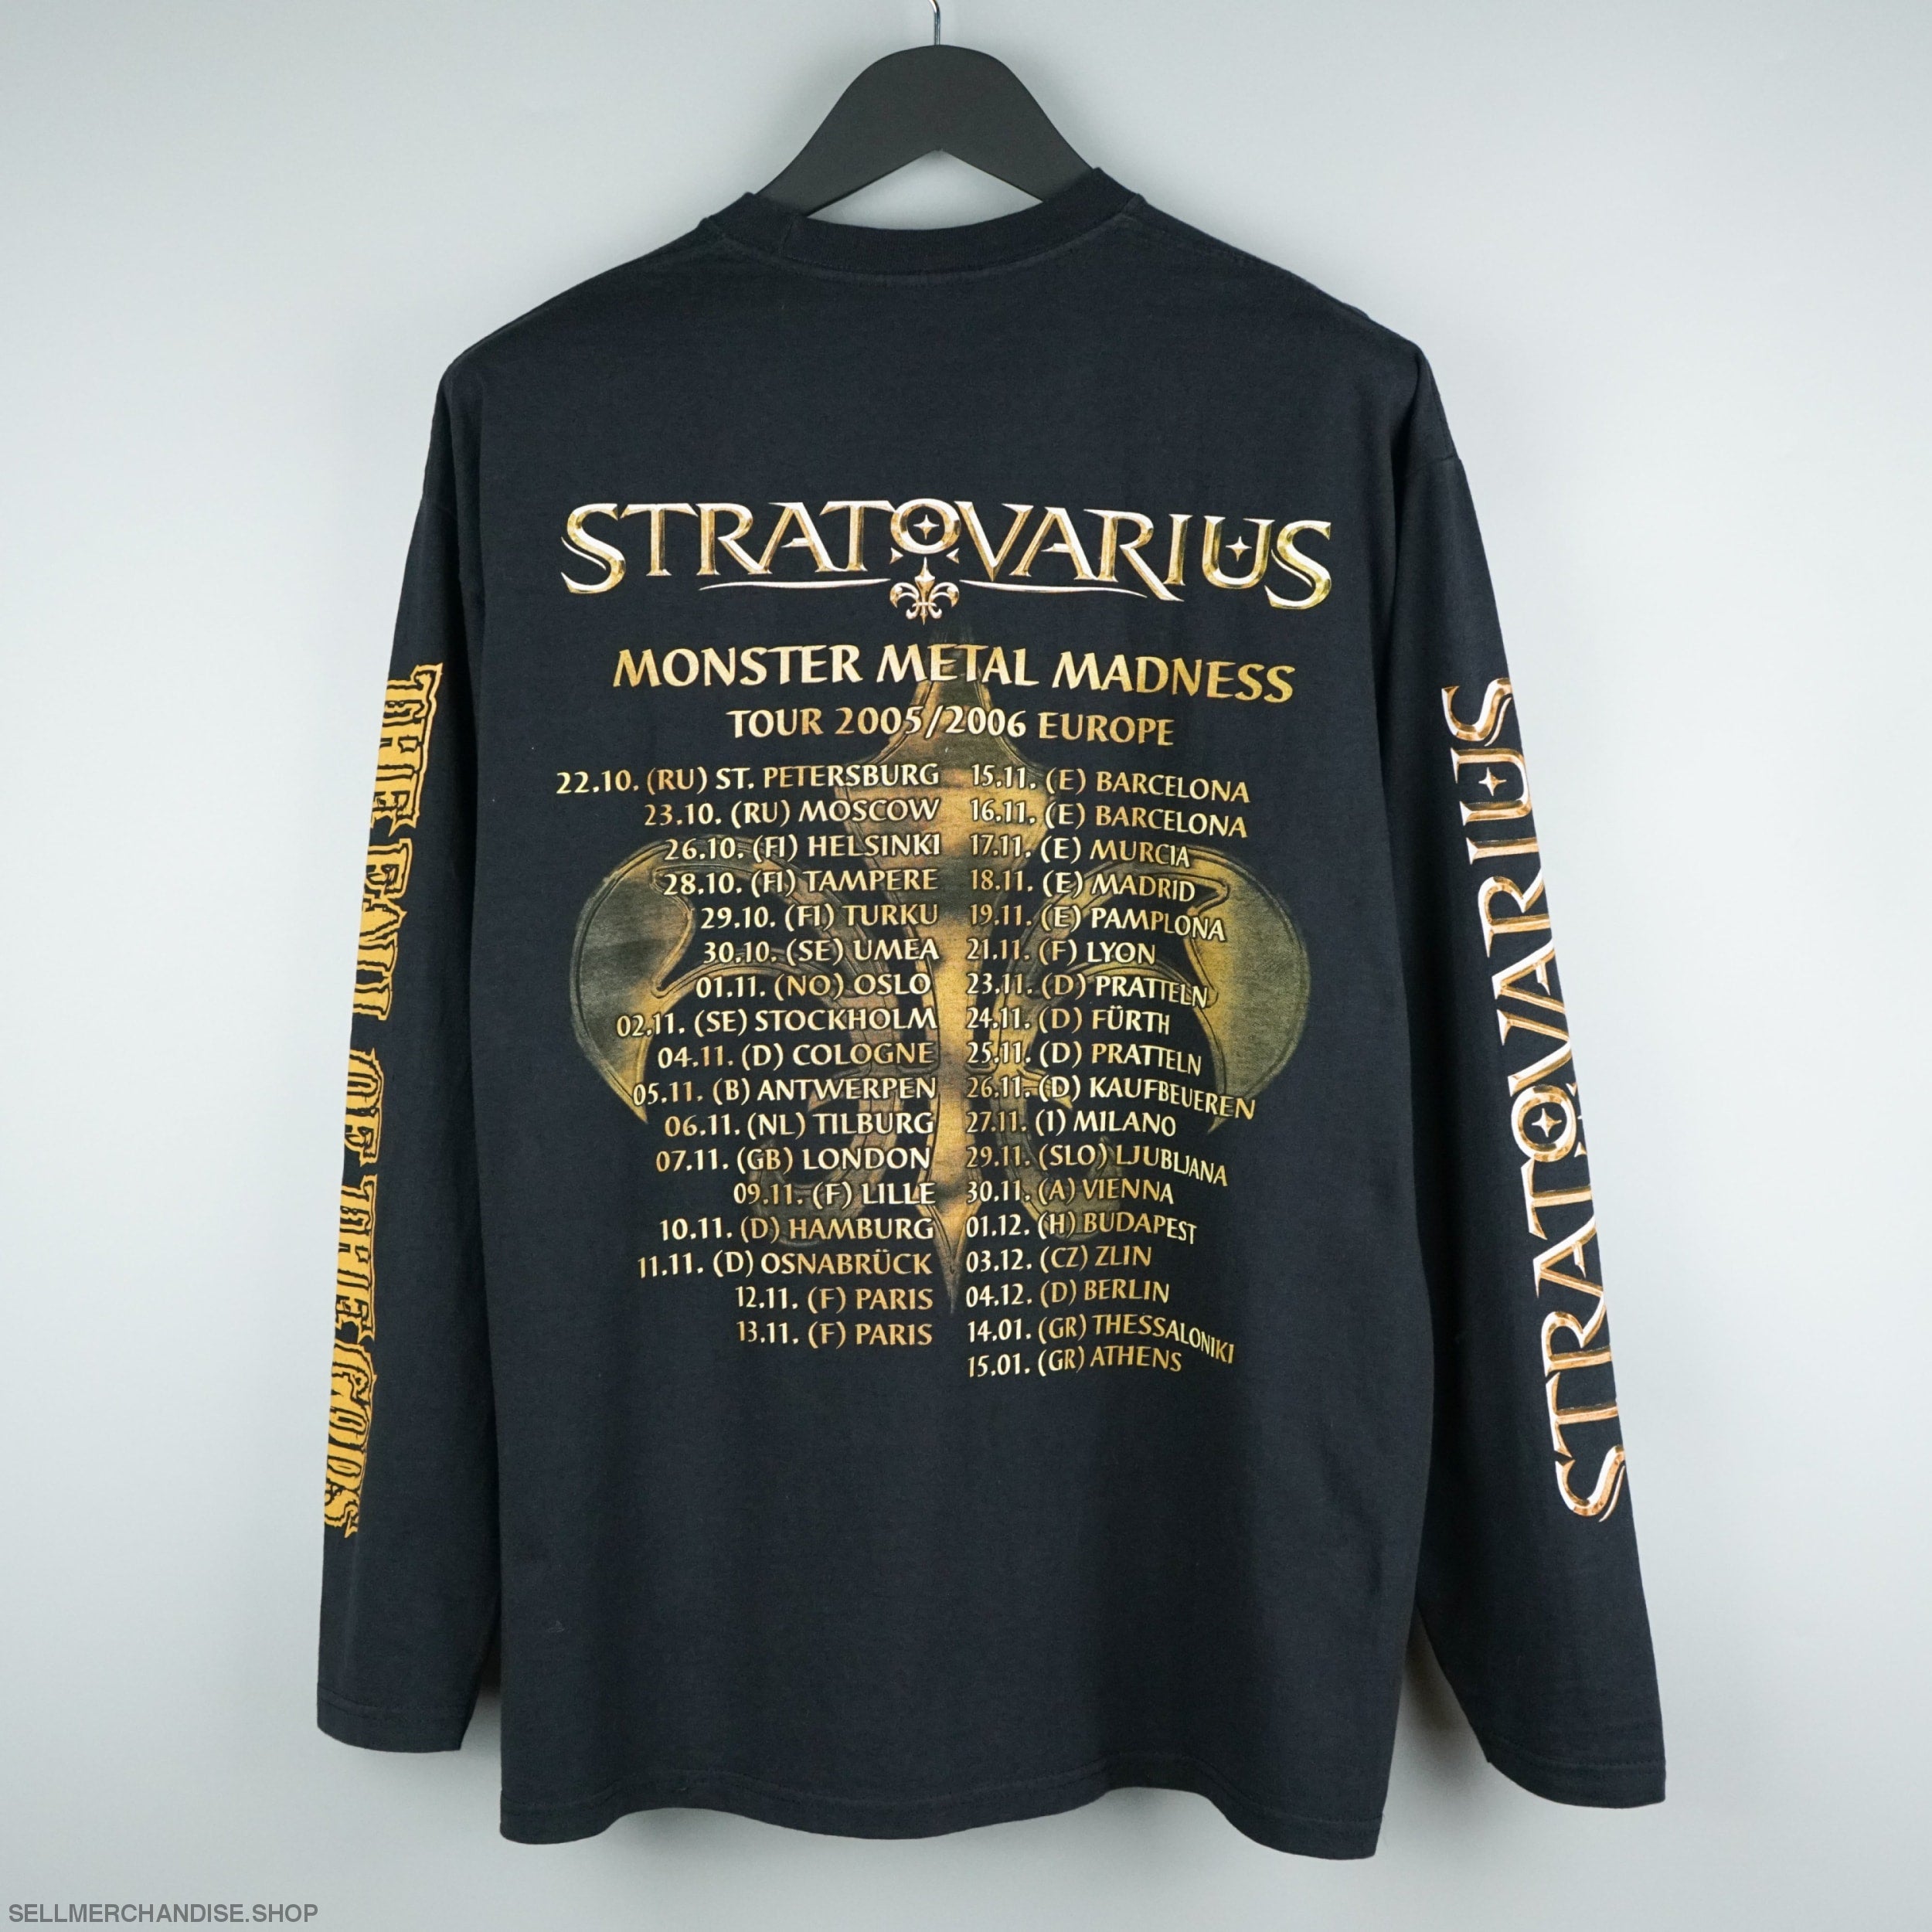 STRATOVARIUS The Chosen Ones LS 1999  TShirtSlayer TShirt and BattleJacket  Gallery